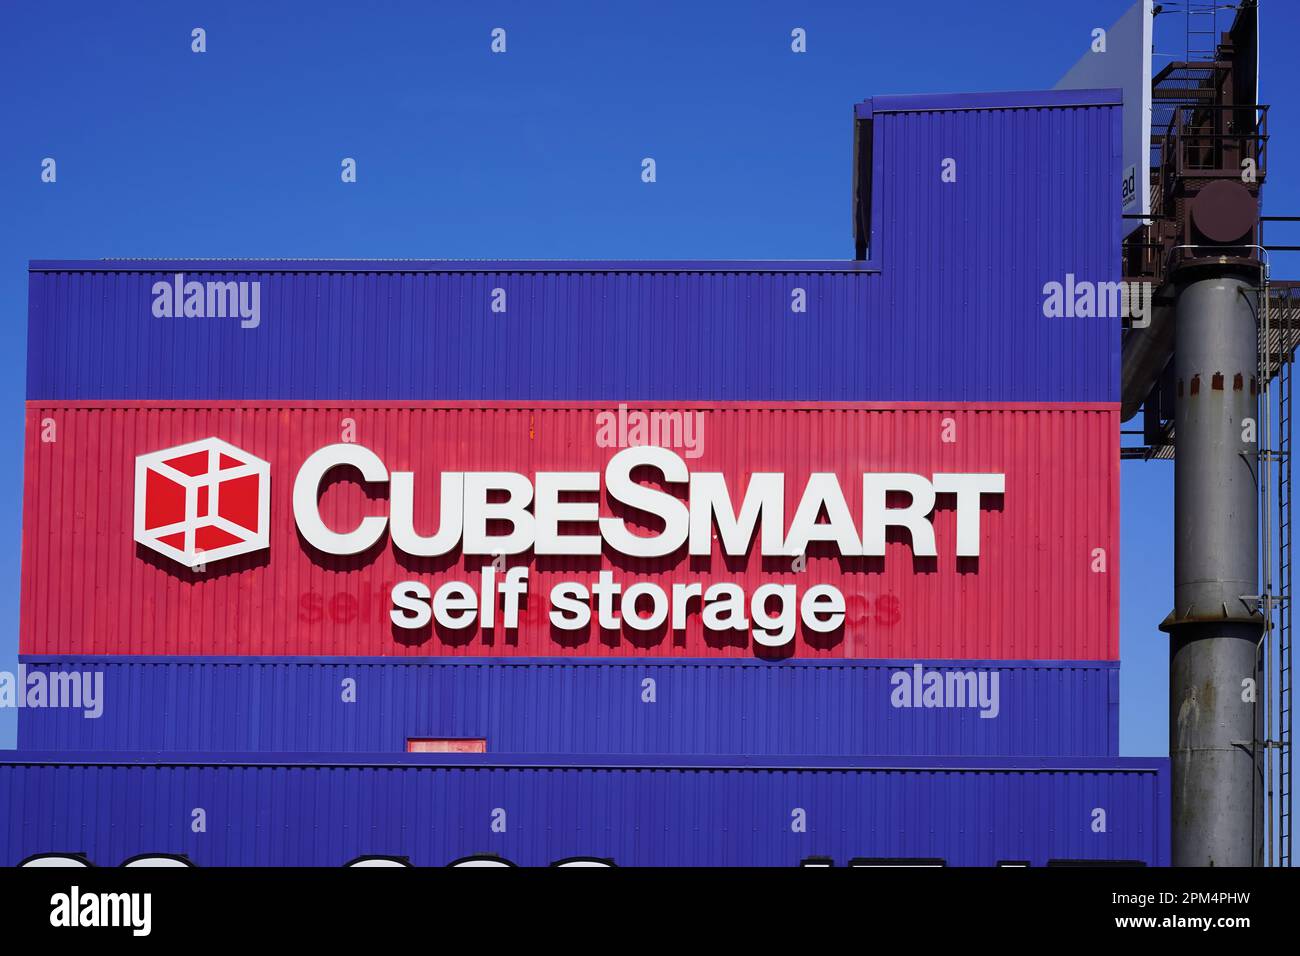 Bronx, NY - April 9, 2023 : CubeSmart self storage and logistics logo billboard on New York City warehouse. Stock Photo